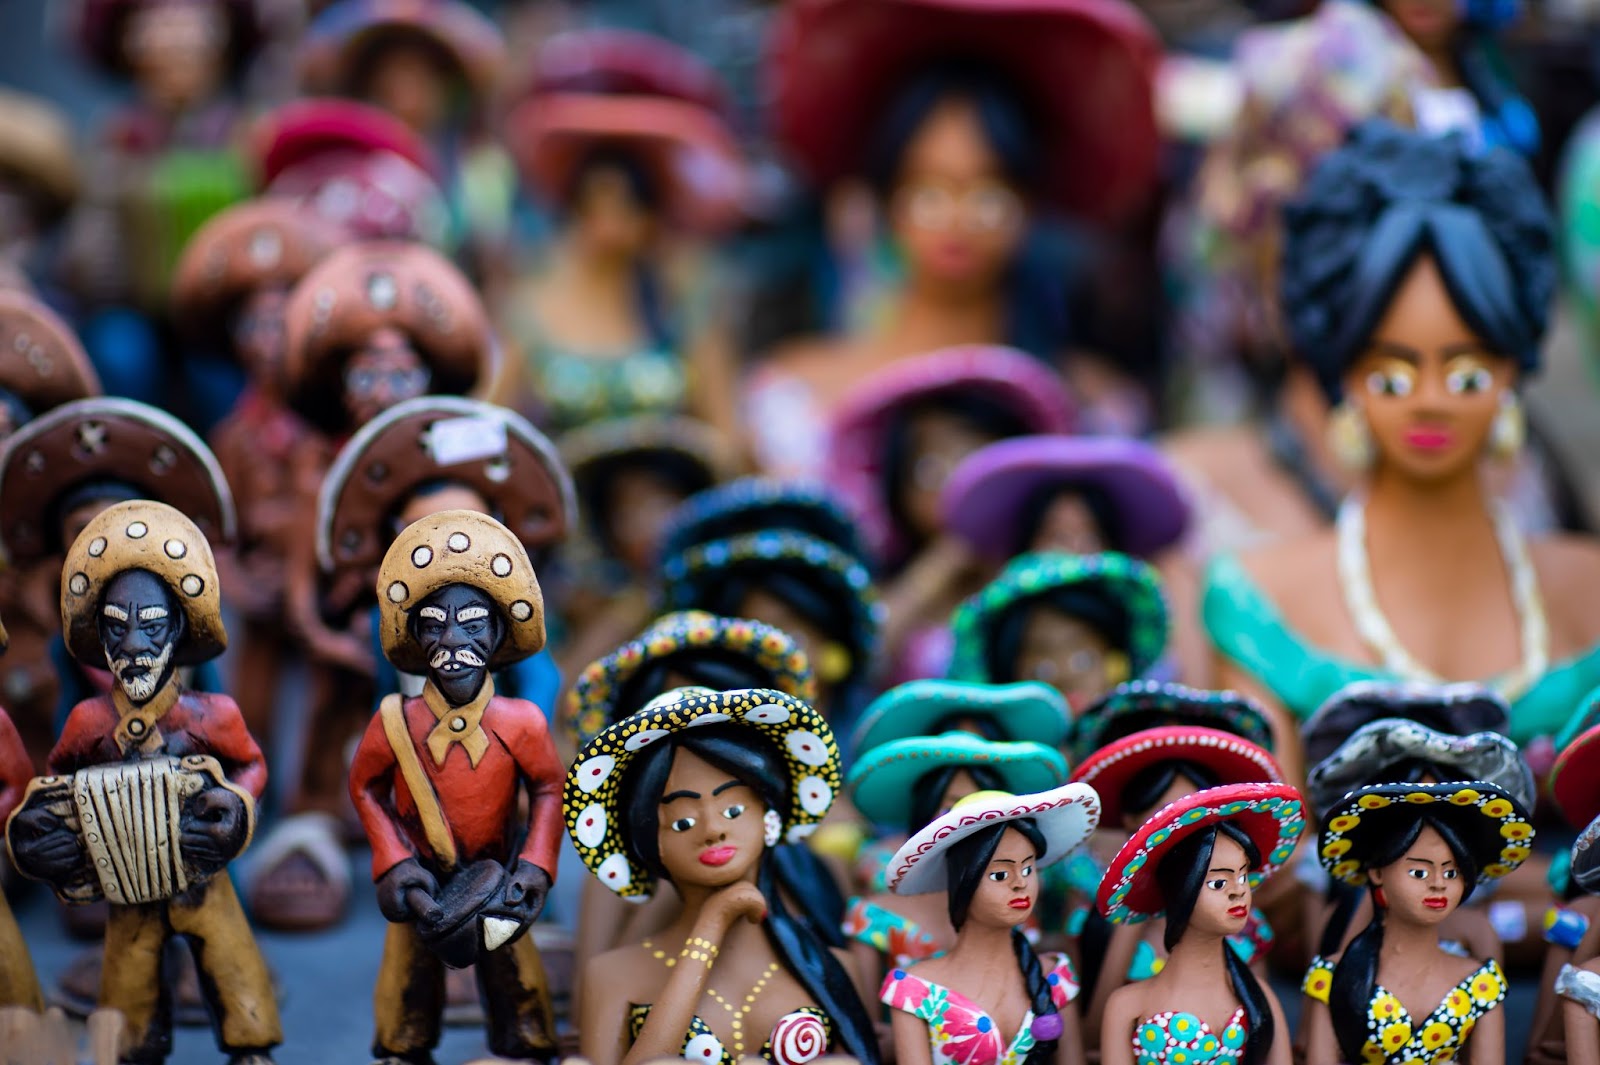 Bonecos de barro feitos artesanalmente, itens tradicionais vendidos nos mercados públicos de Recife.